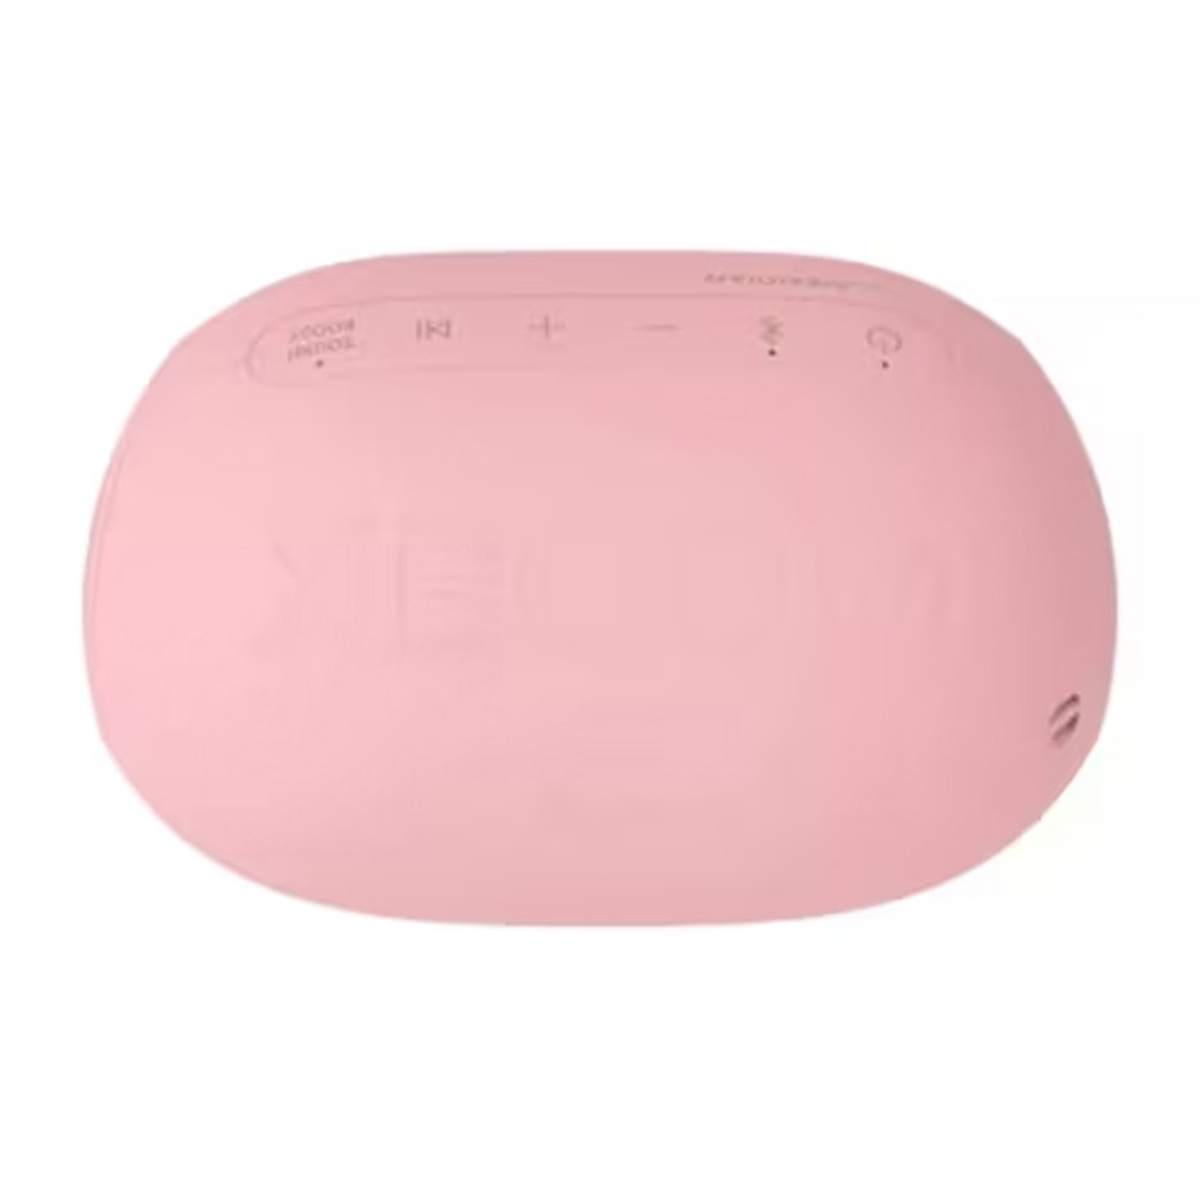 LG XBOOM Go Jellybean Portable Bluetooth Speaker, Bubble Gum (Pink), PL2P